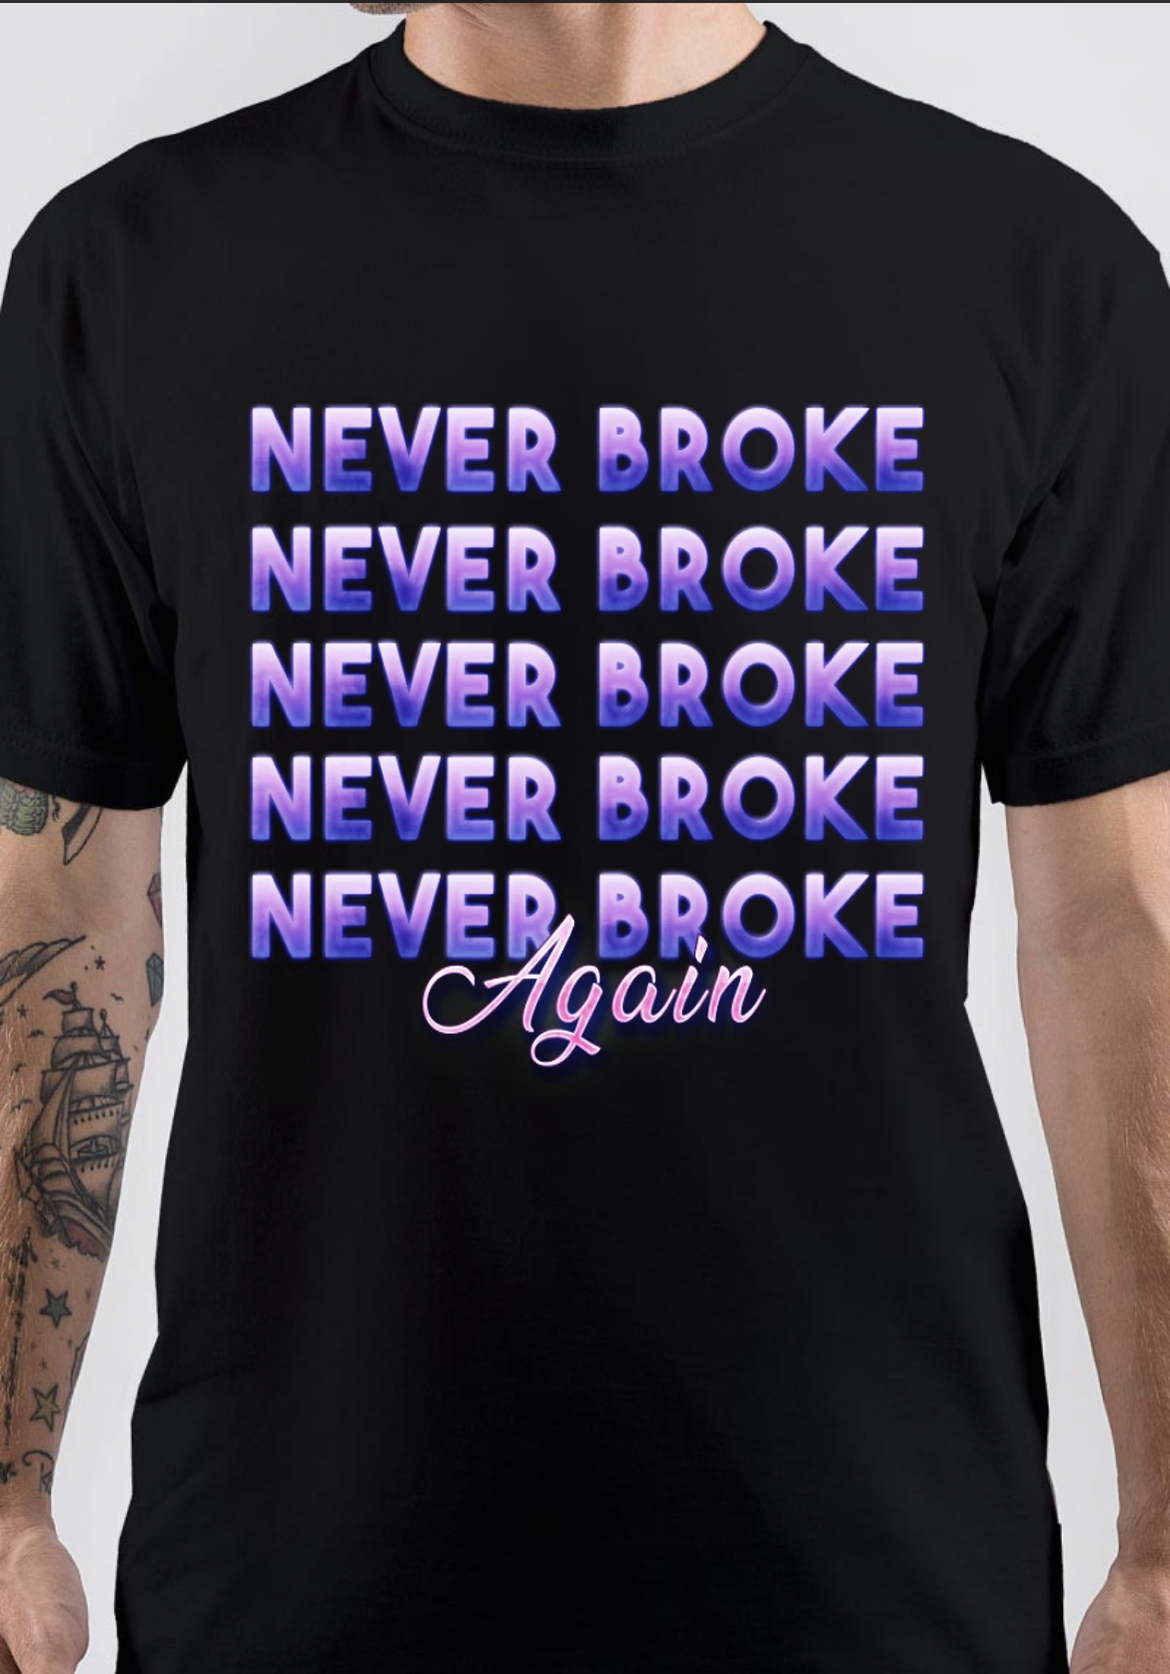 Never broke again, Shirts